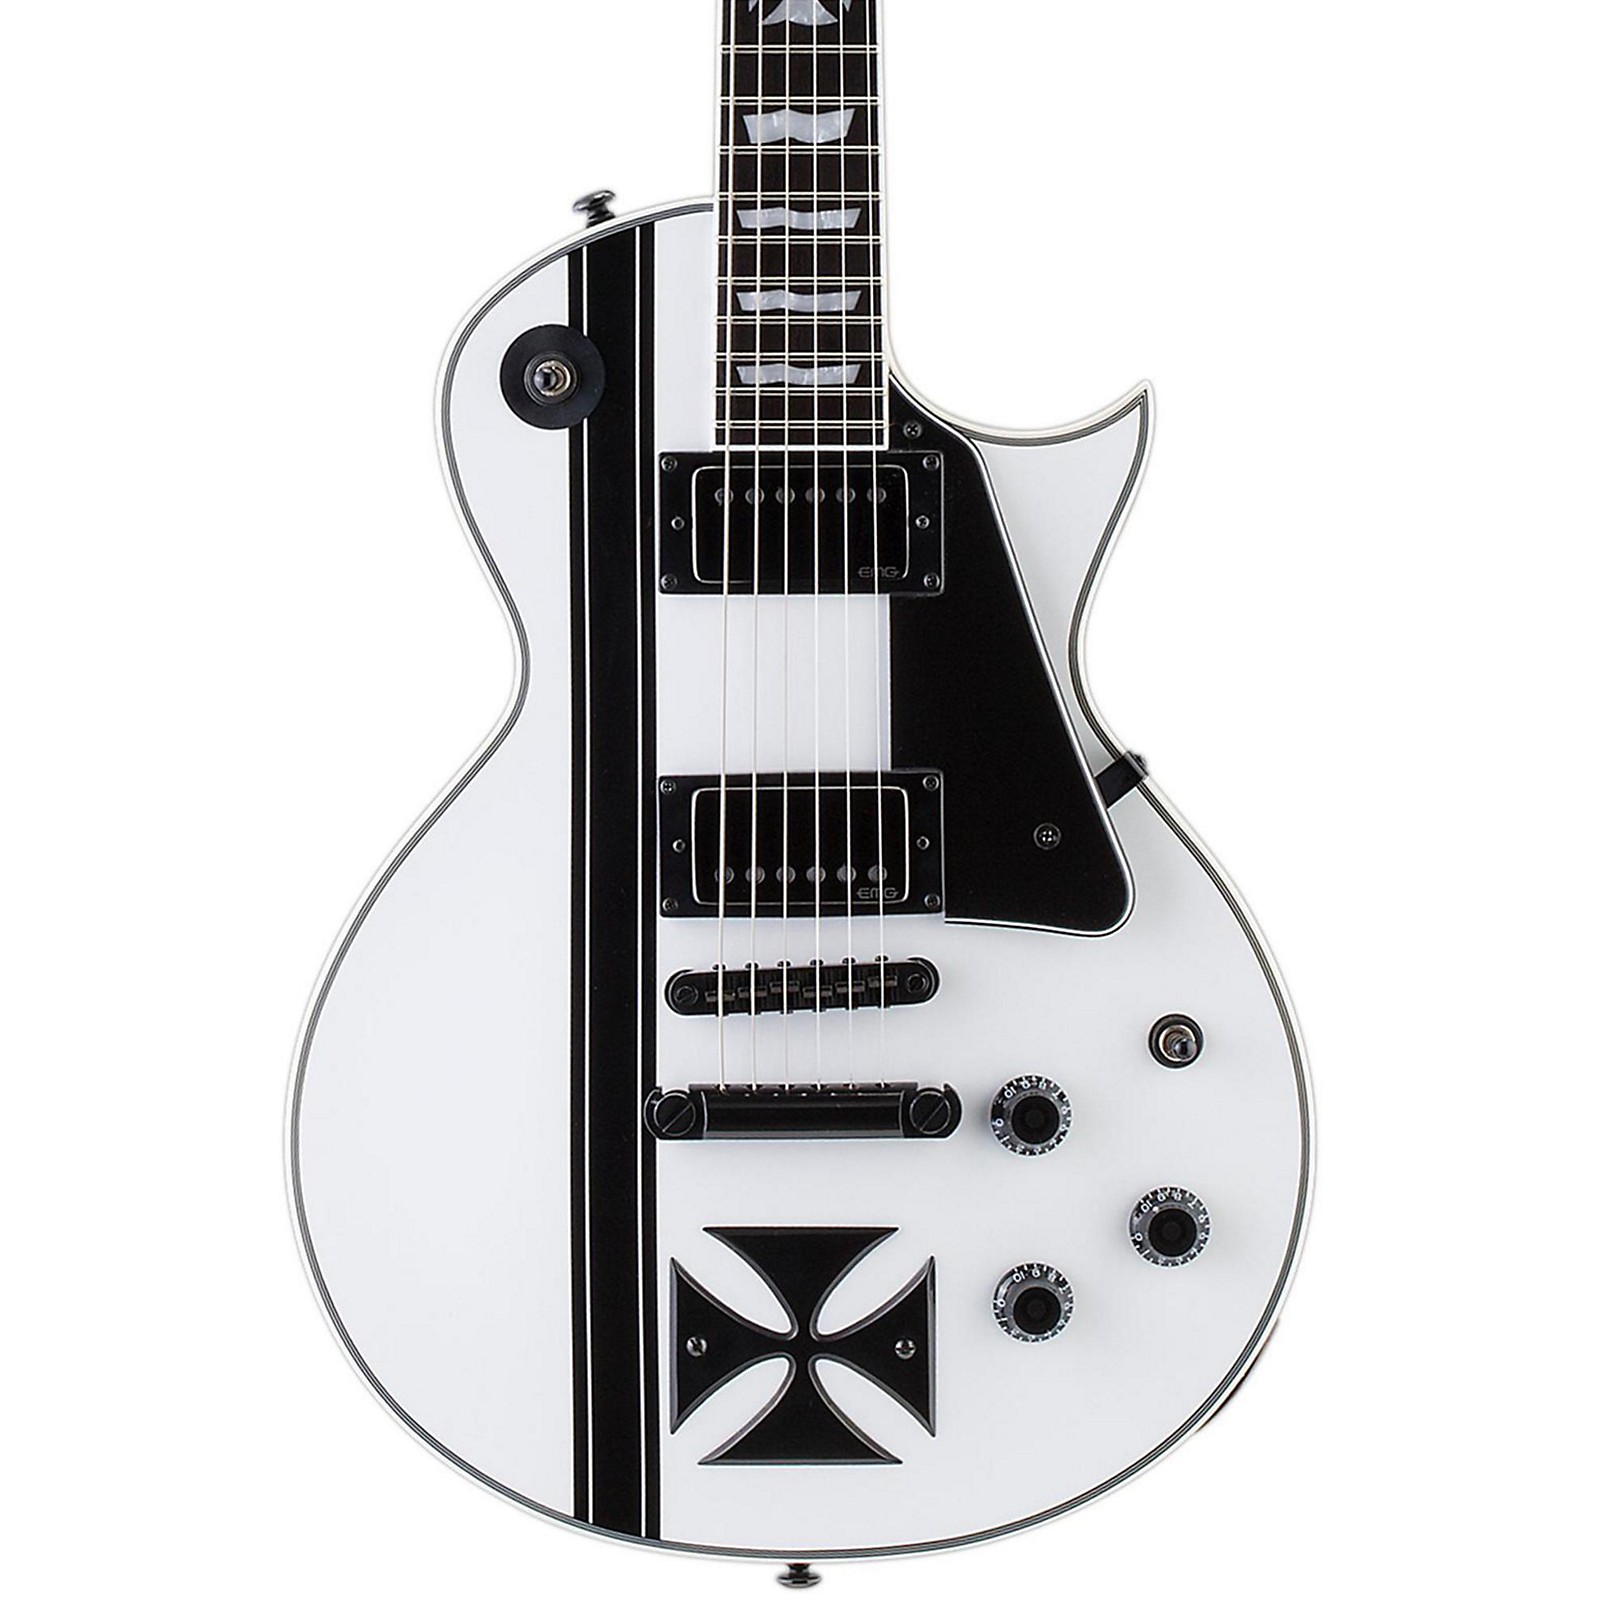 Miniature Guitar Metallica James Hetfield Iron Cross Gibson Style